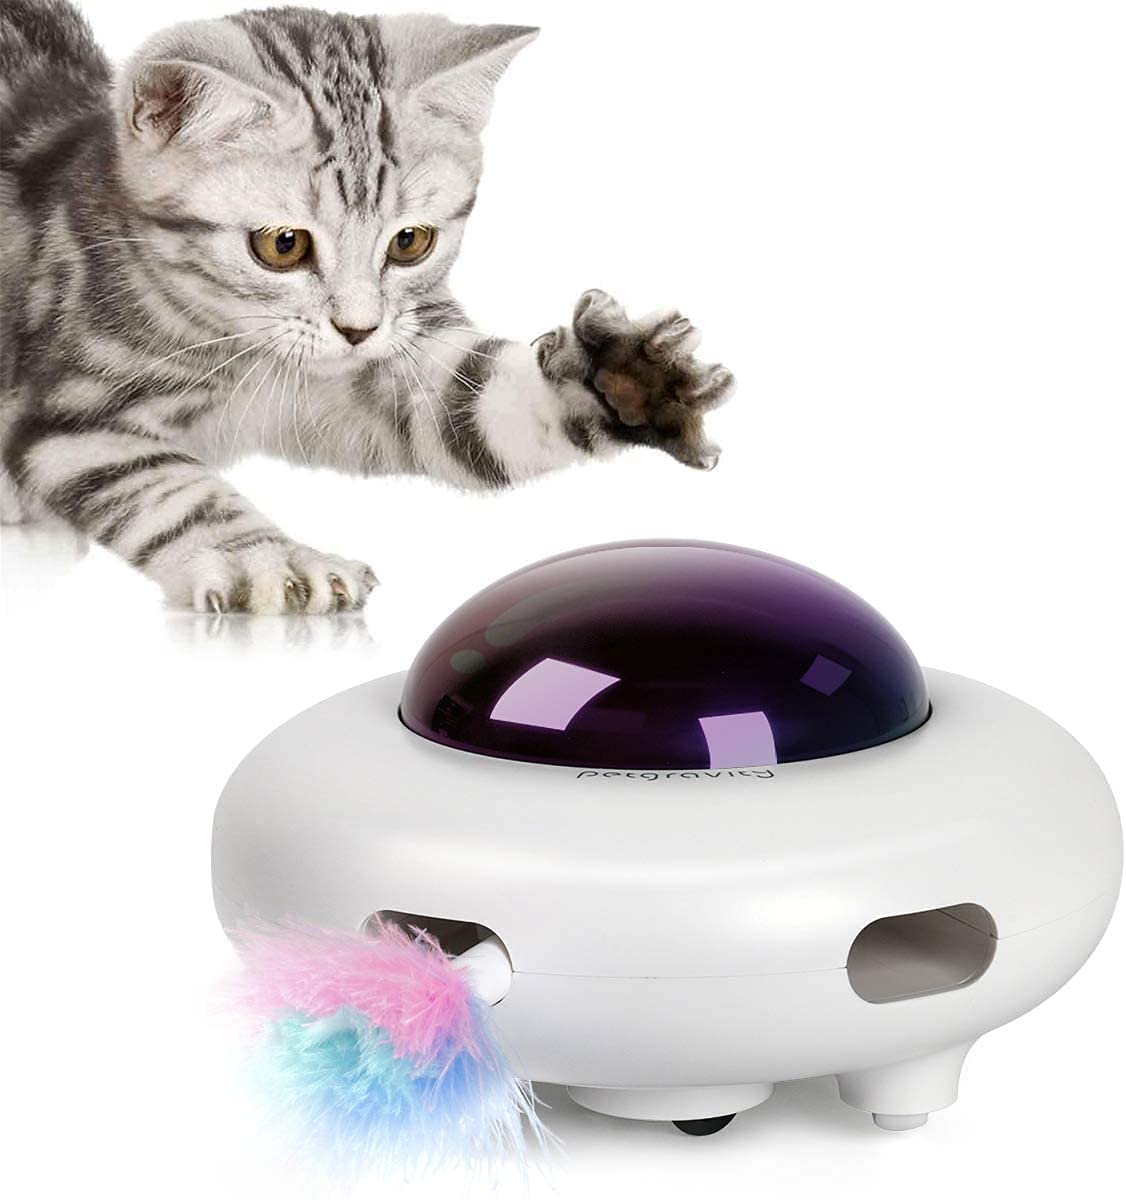 Littryee brinquedo inteligente interativa para gatos,brinquedo